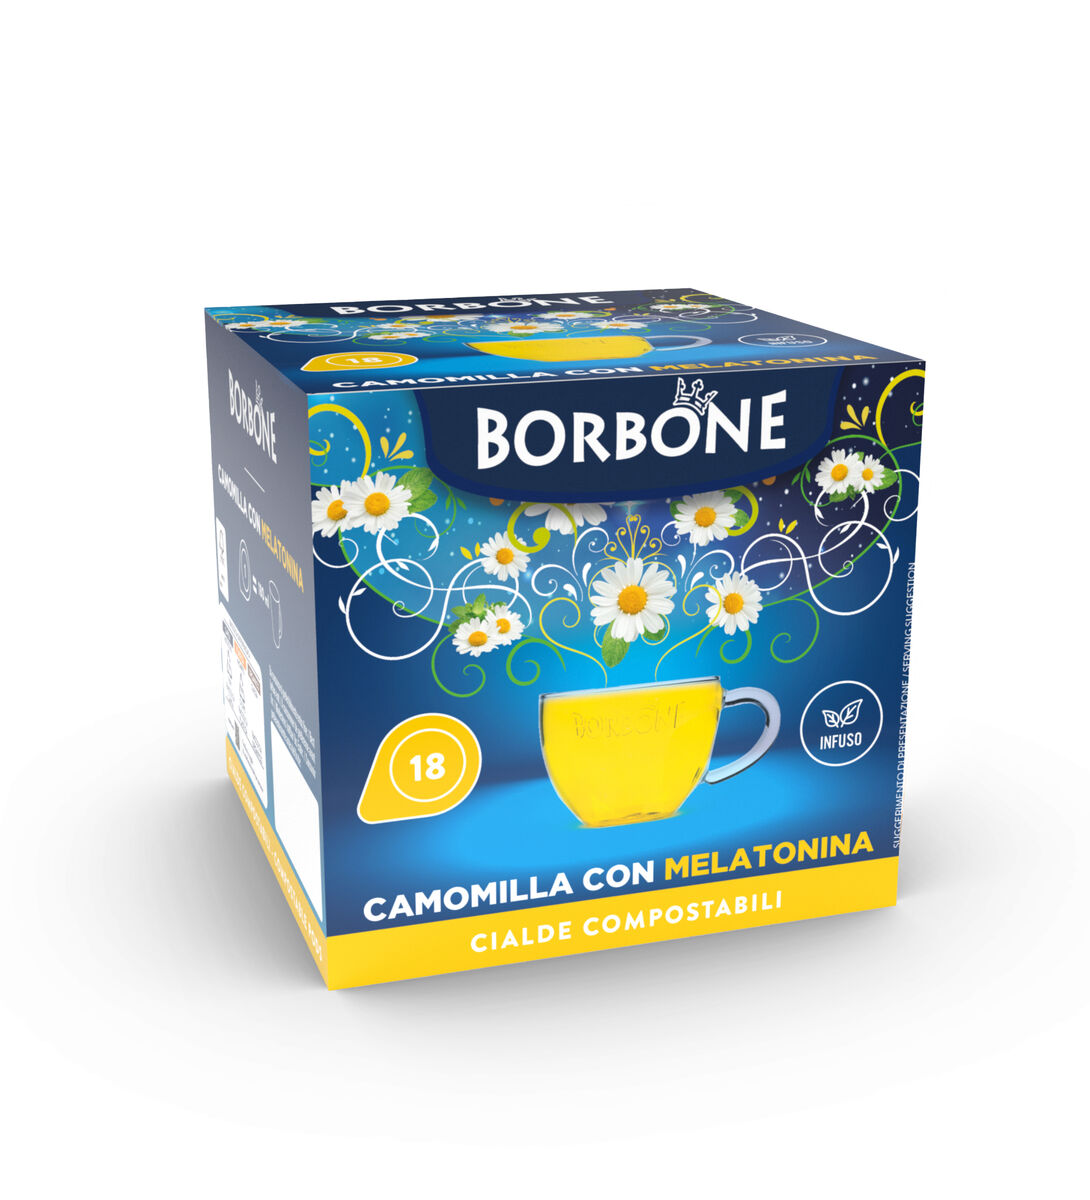 Bonomelli, Camomilla, Bonomelli Relaxing Tisane, Cup Of Calm